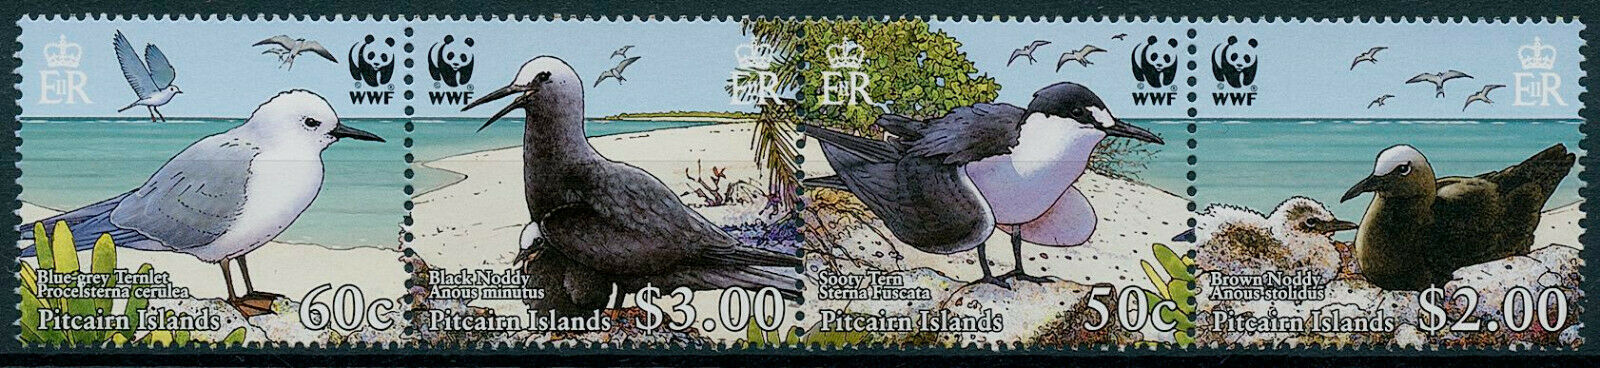 Pitcairn Islands 2007 MNH WWF Stamps Terns & Noddies Sooty Tern Birds 4v Strip